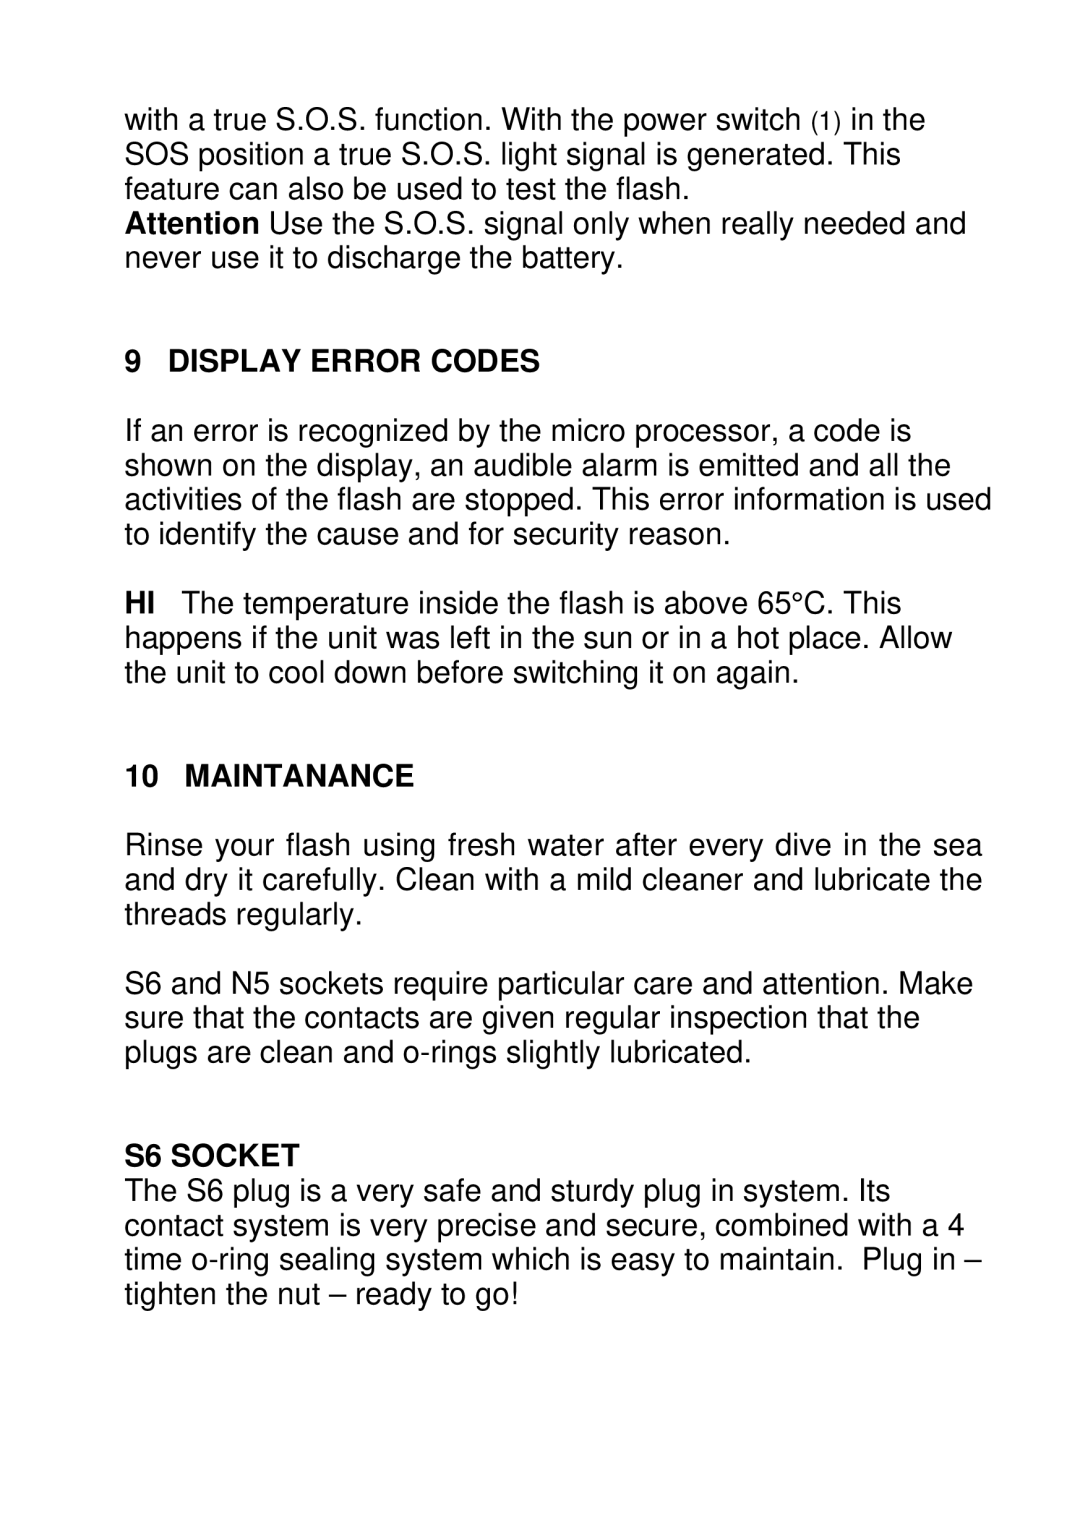 Canon 150DIGITAL user manual Display Error Codes, Maintanance, S6 Socket 